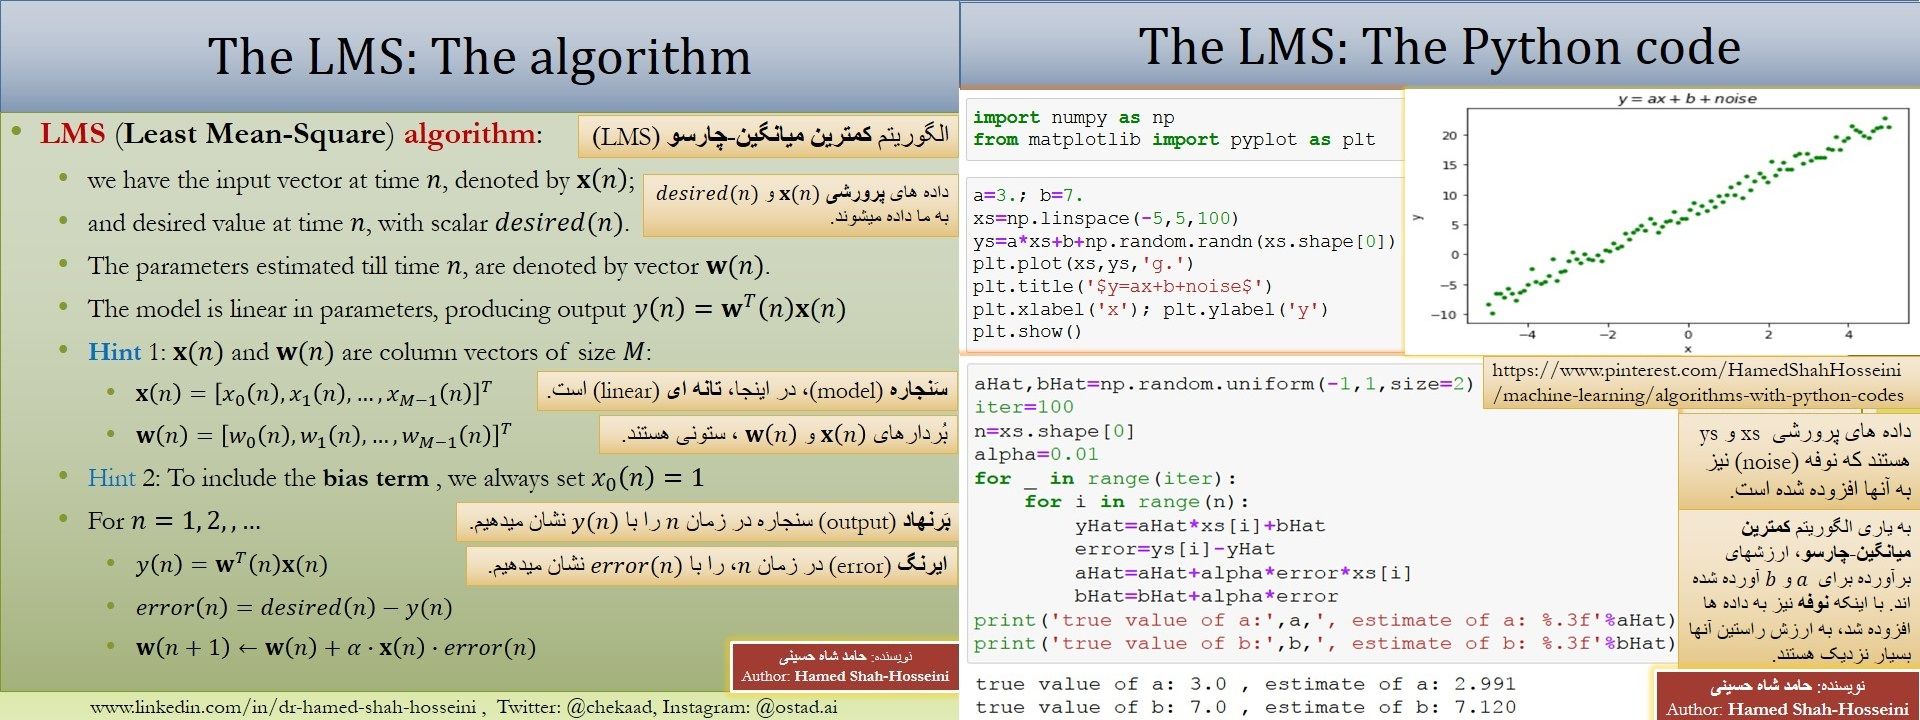 lms algorithm python